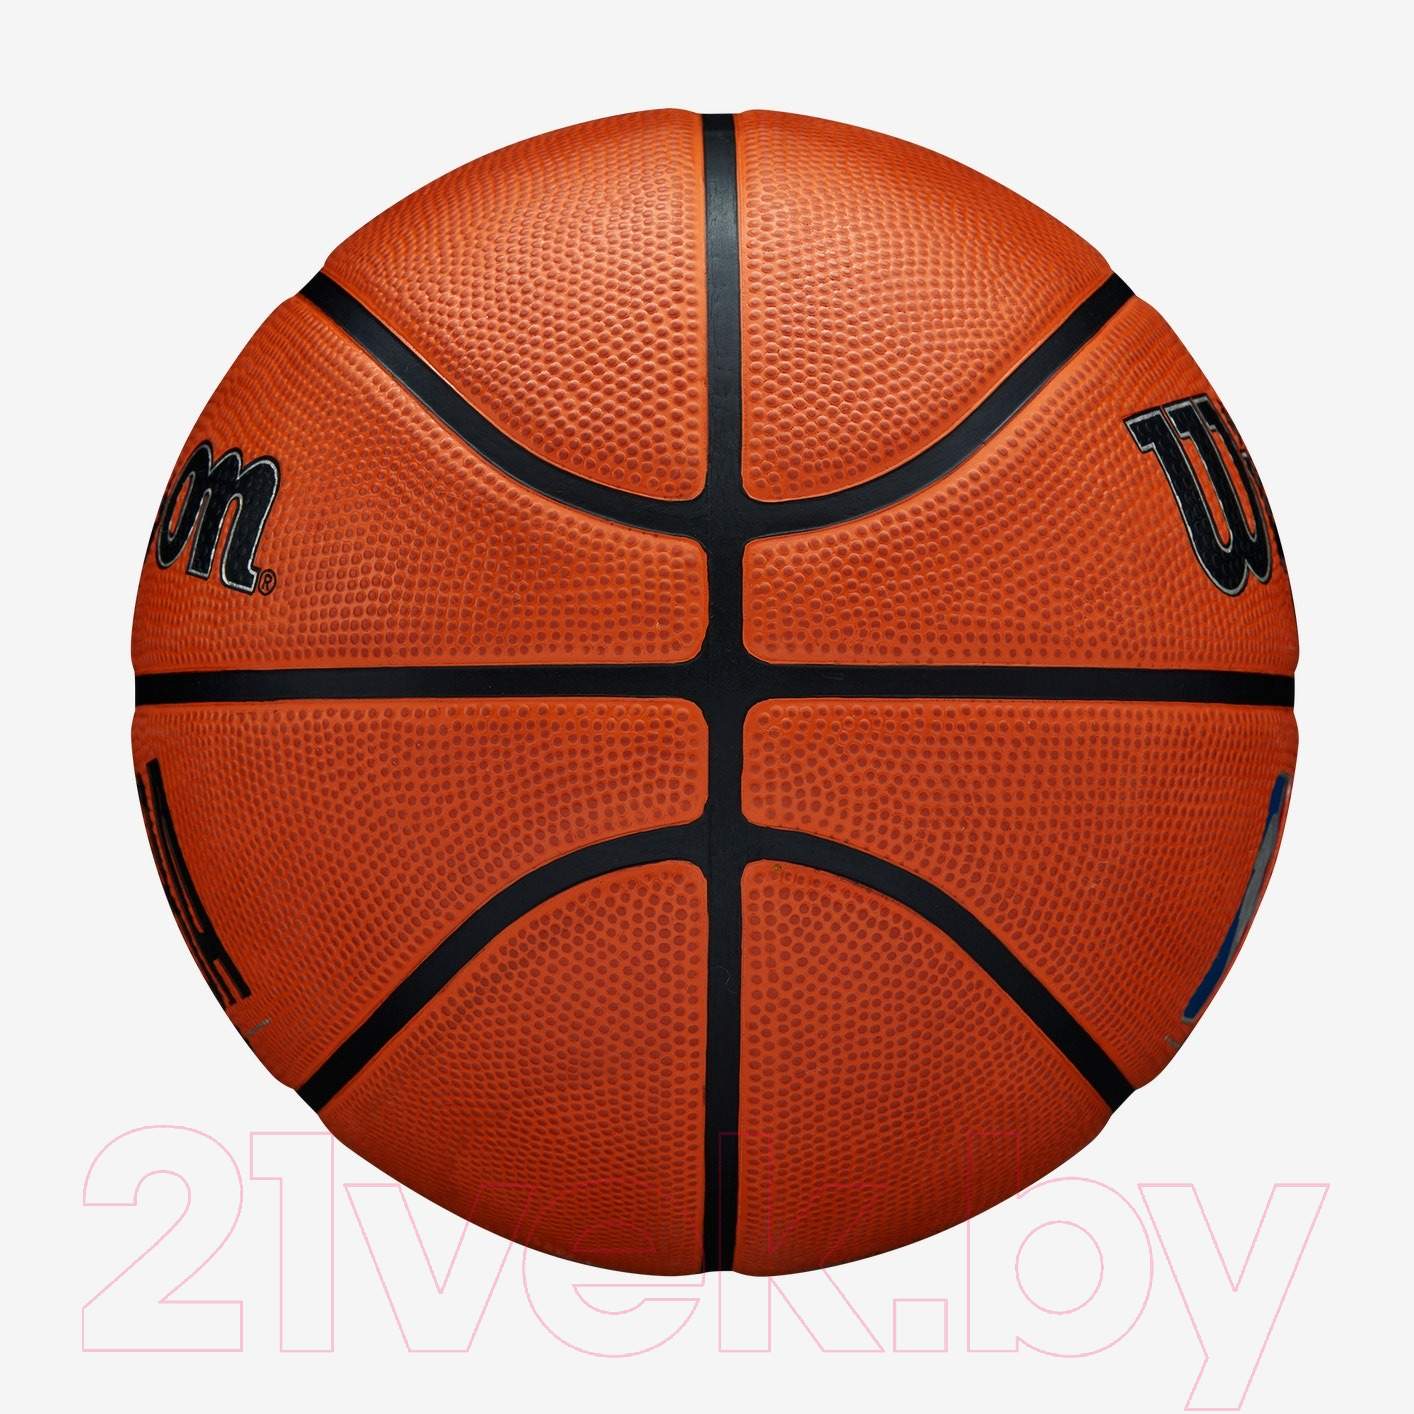 Баскетбольный мяч Wilson Nba Drv Pro / WTB9100XB06